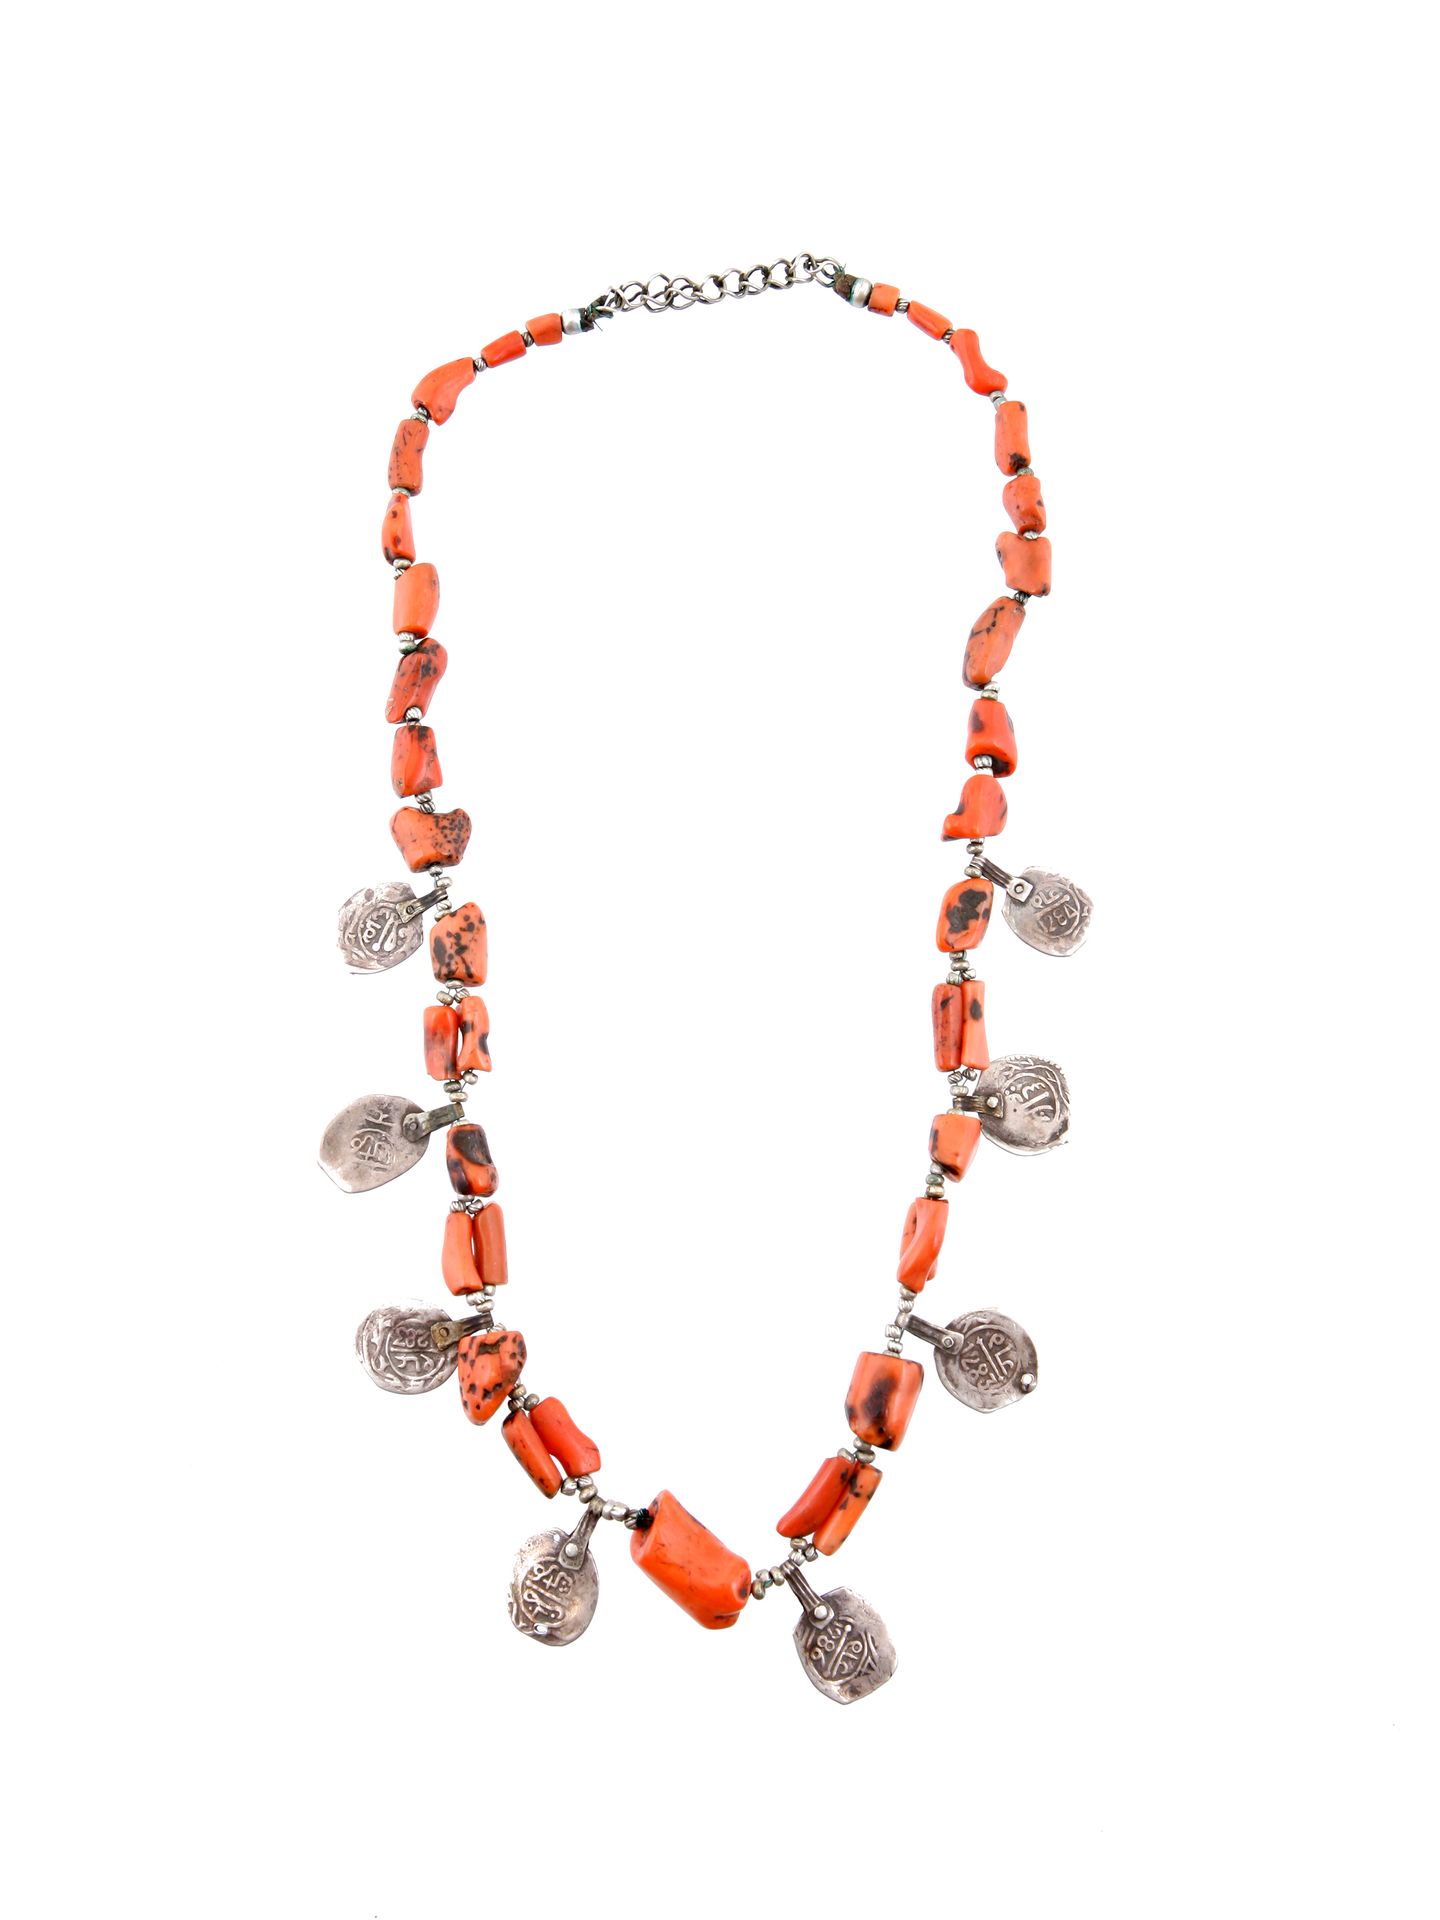 A Berber Necklace with eight Pendants Collier mit acht Schmuck-Anhängern

Berber&hellip;